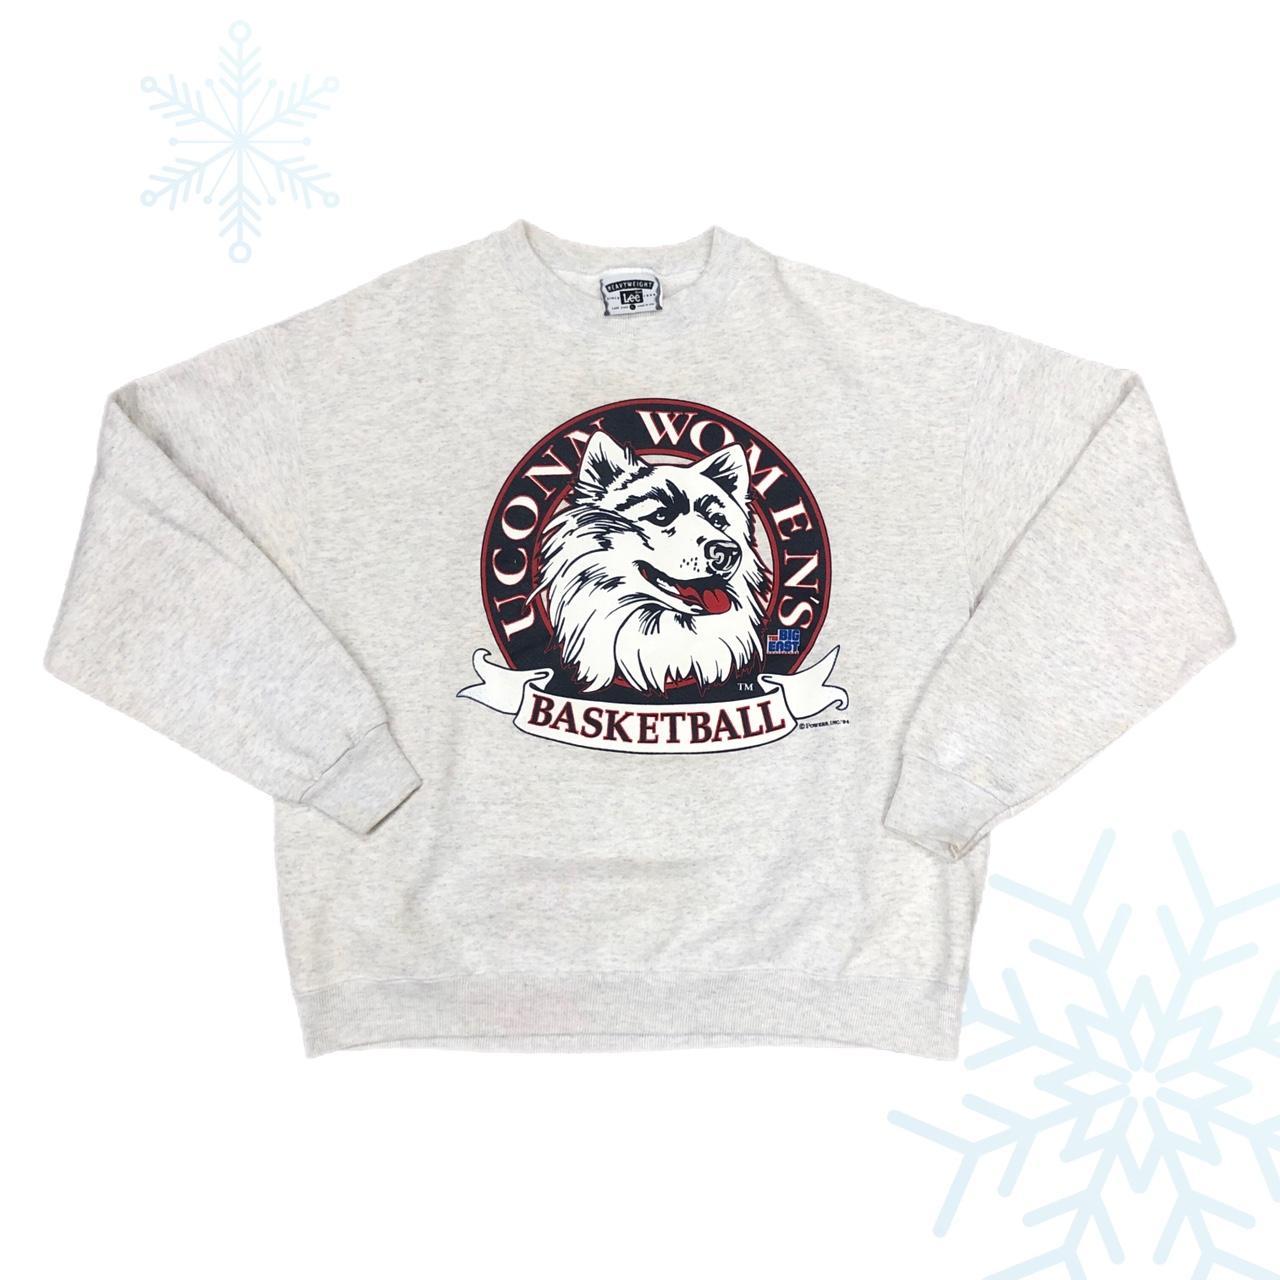 Vintage 1994 NCAA UConn Connecticut Huskies Women's Basketball Crewneck Sweatshirt (L)